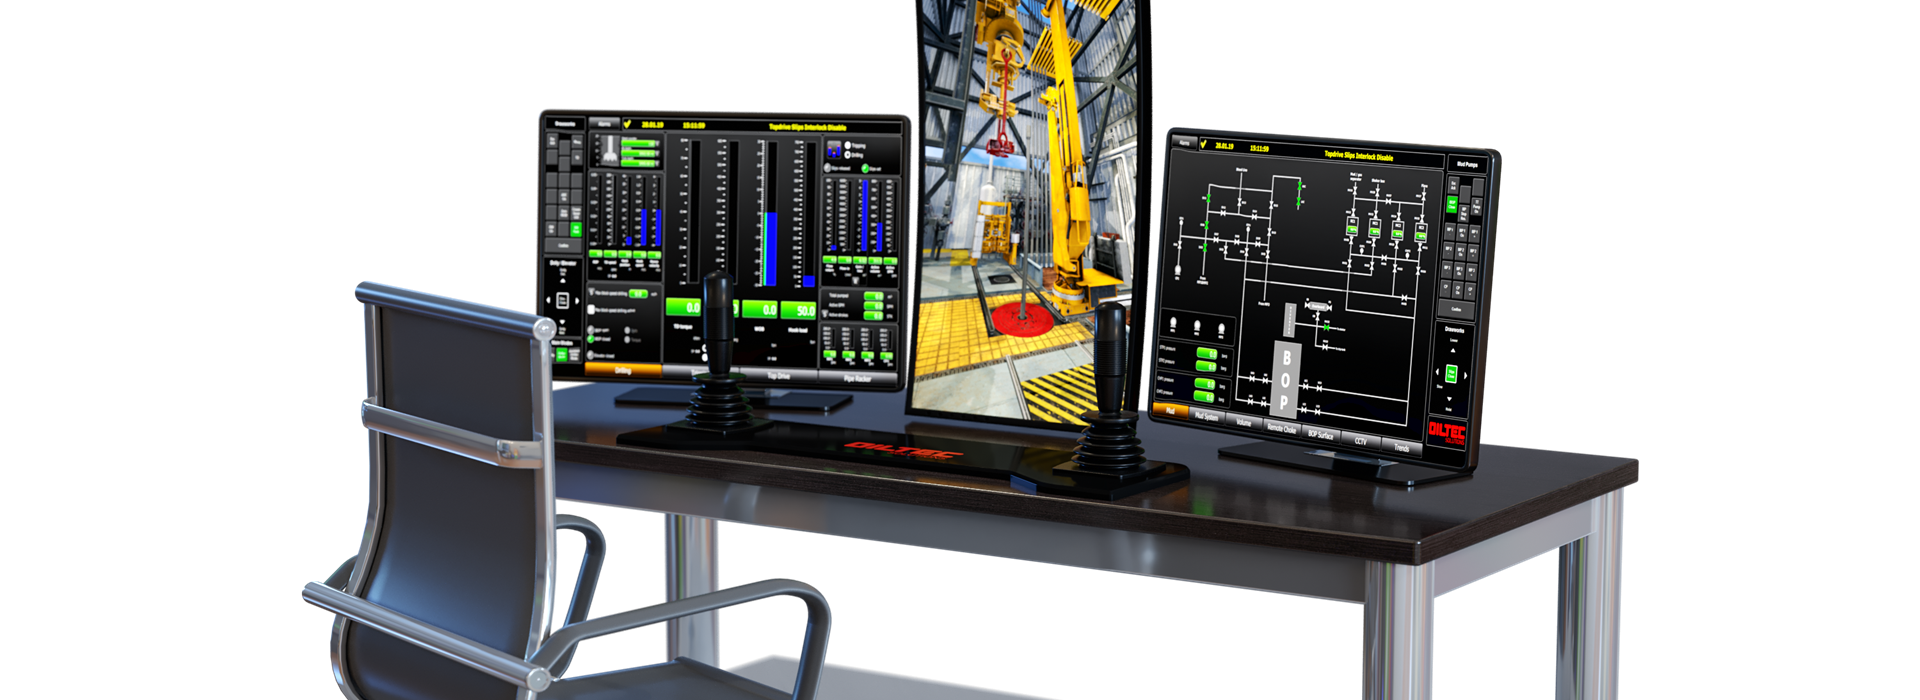 Crane Simulators Offer High Tech Training - Sims Crane